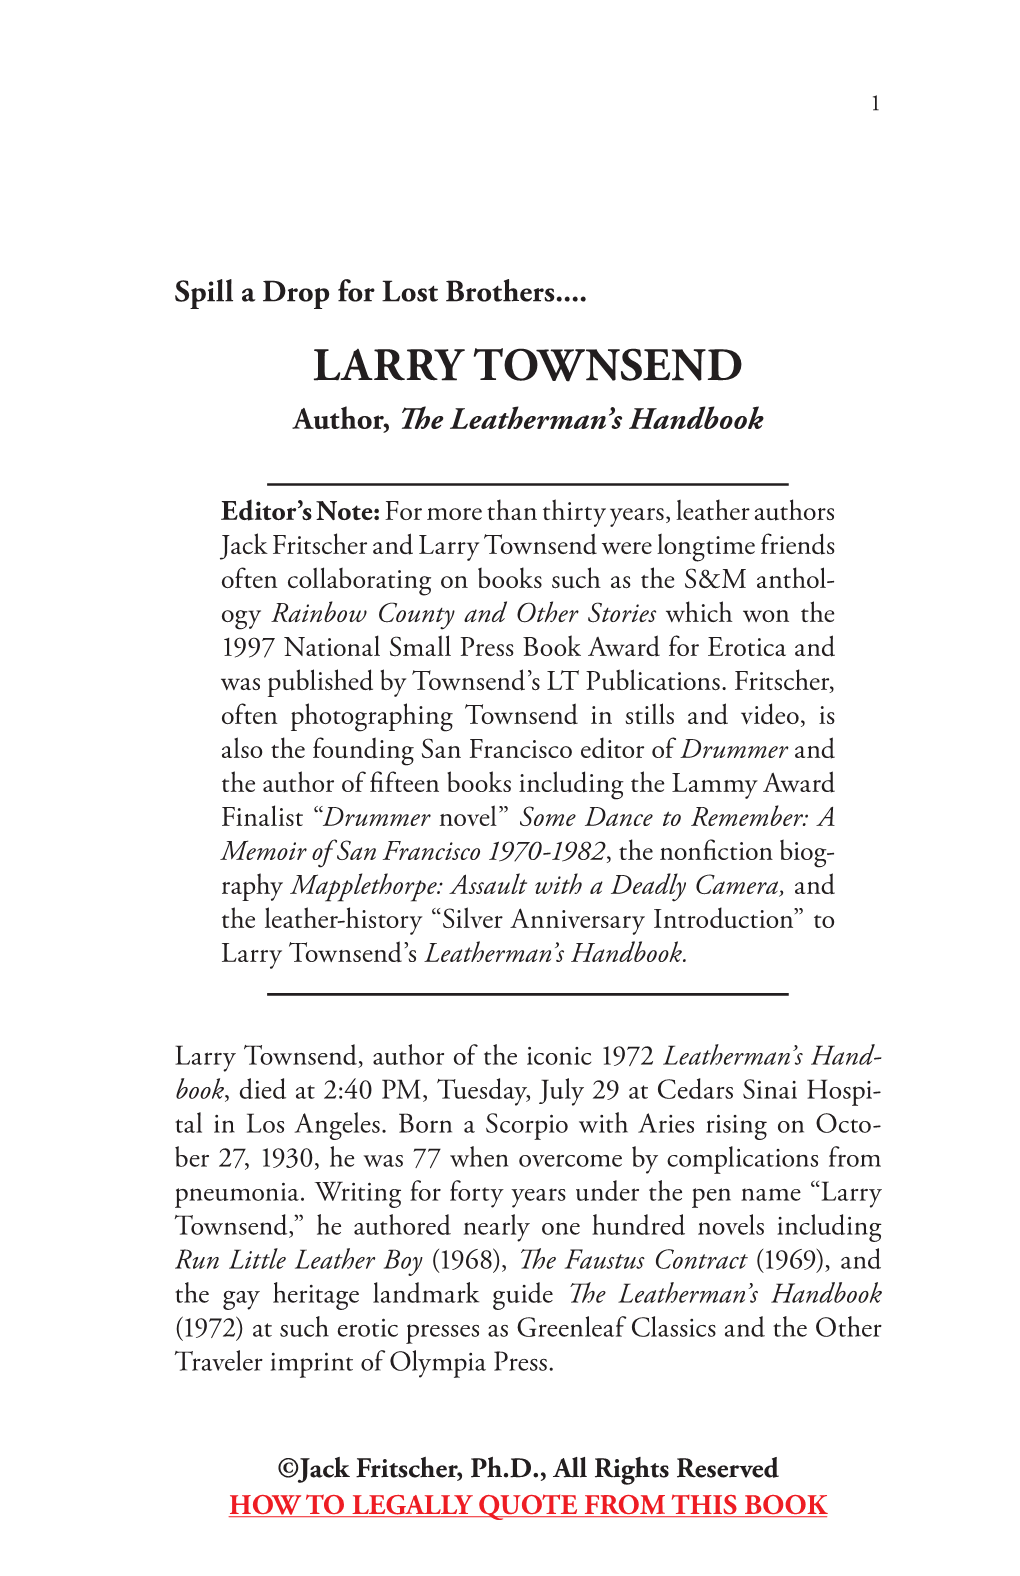 Larry Townsend: Author, the Leatherman's Handbook